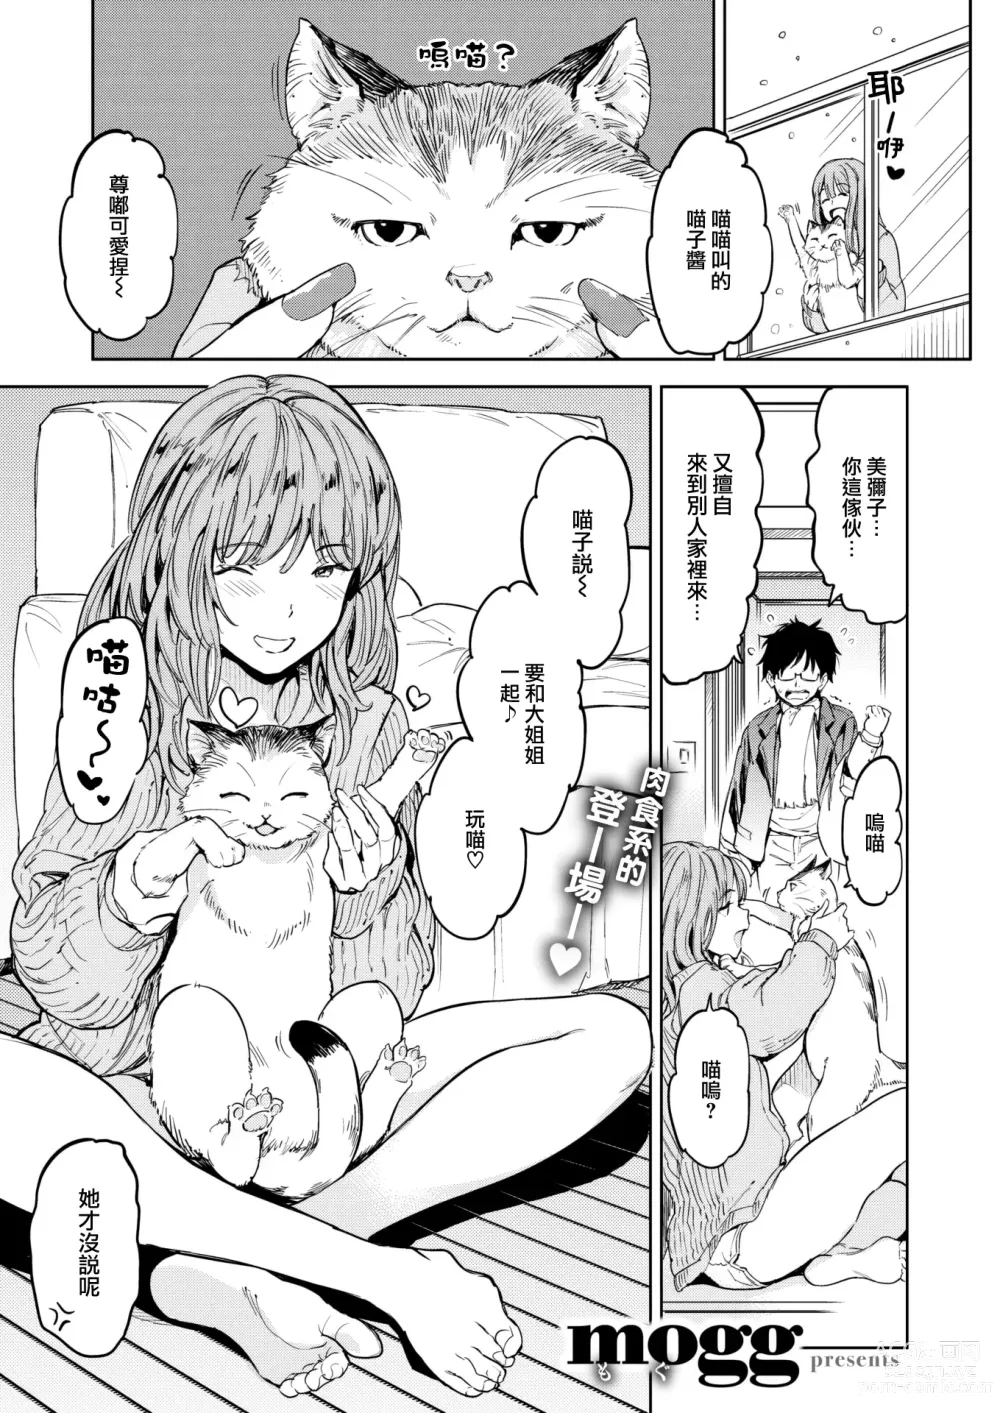 Page 2 of manga Gal Neko